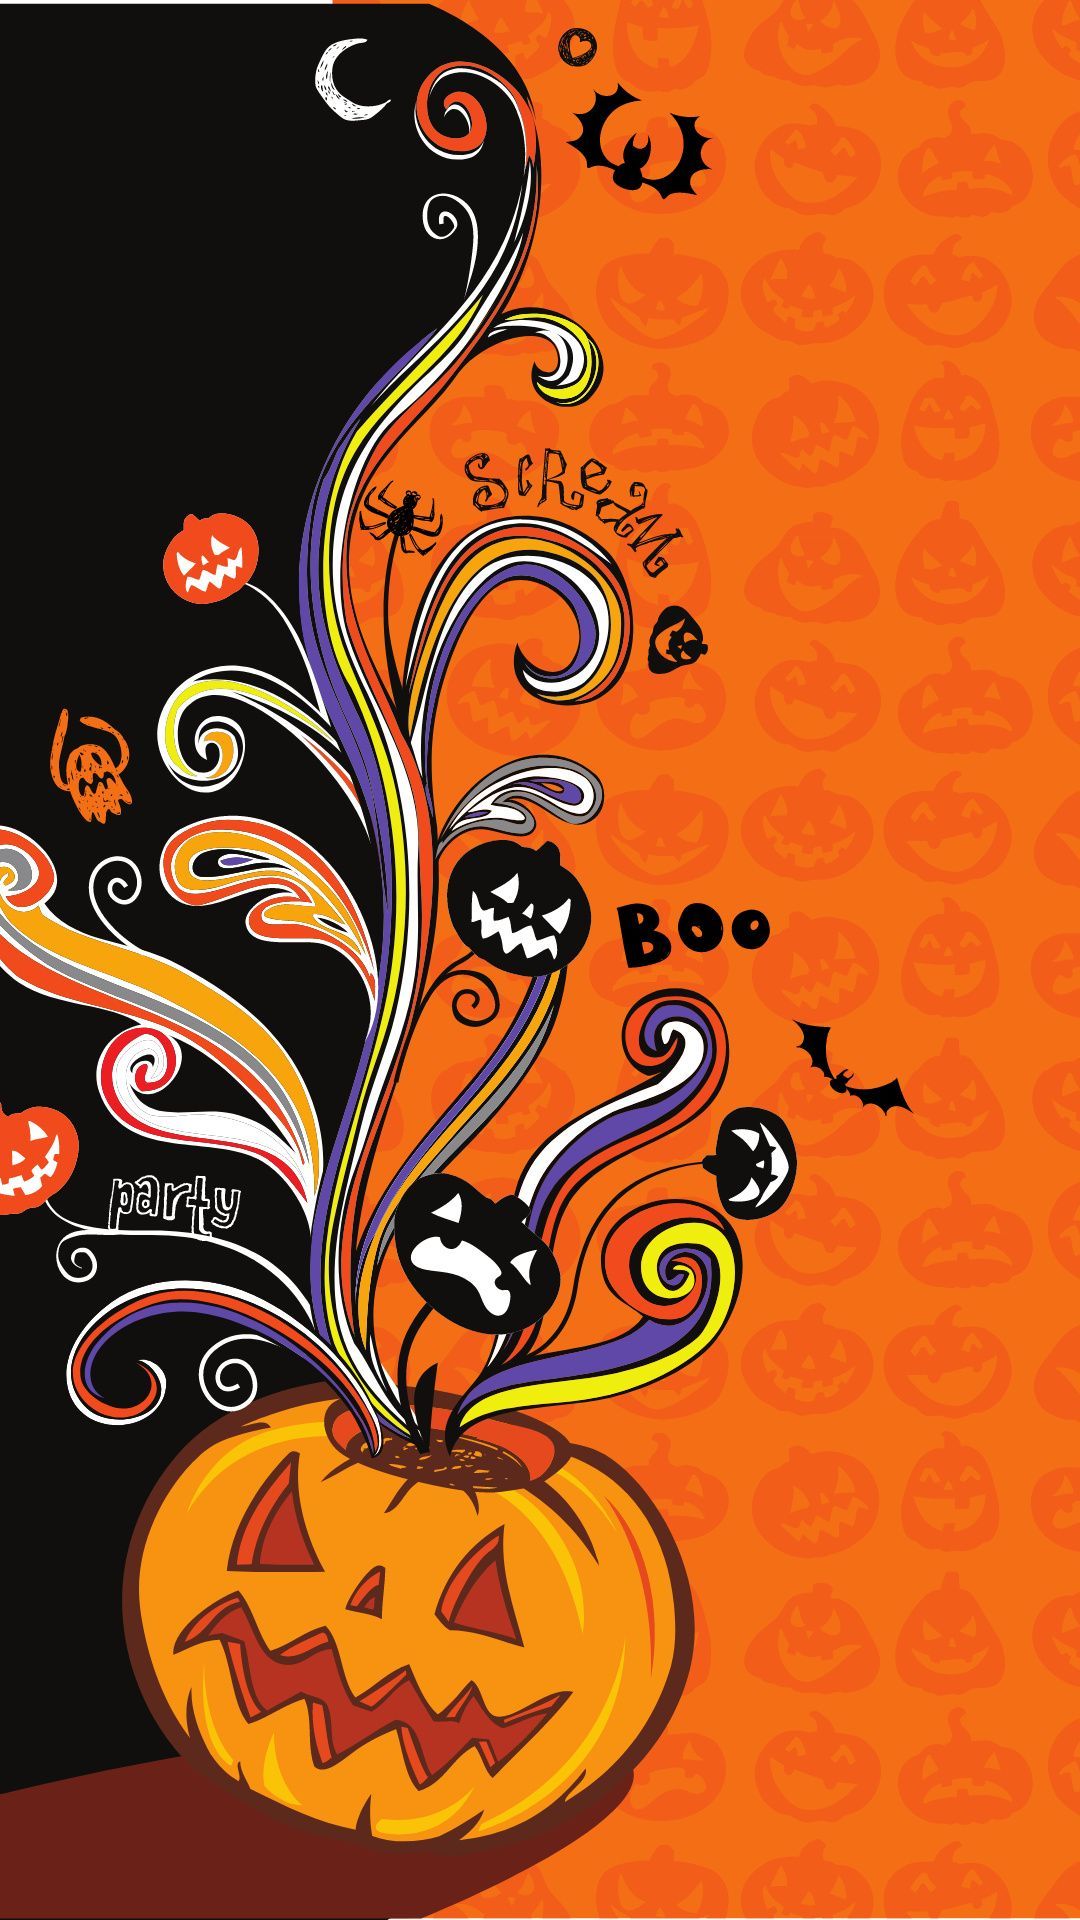 Cute Halloween Wallpaper ideas for iPhone. FREE. Witchy wallpaper, Halloween wallpaper background, Halloween wallpaper